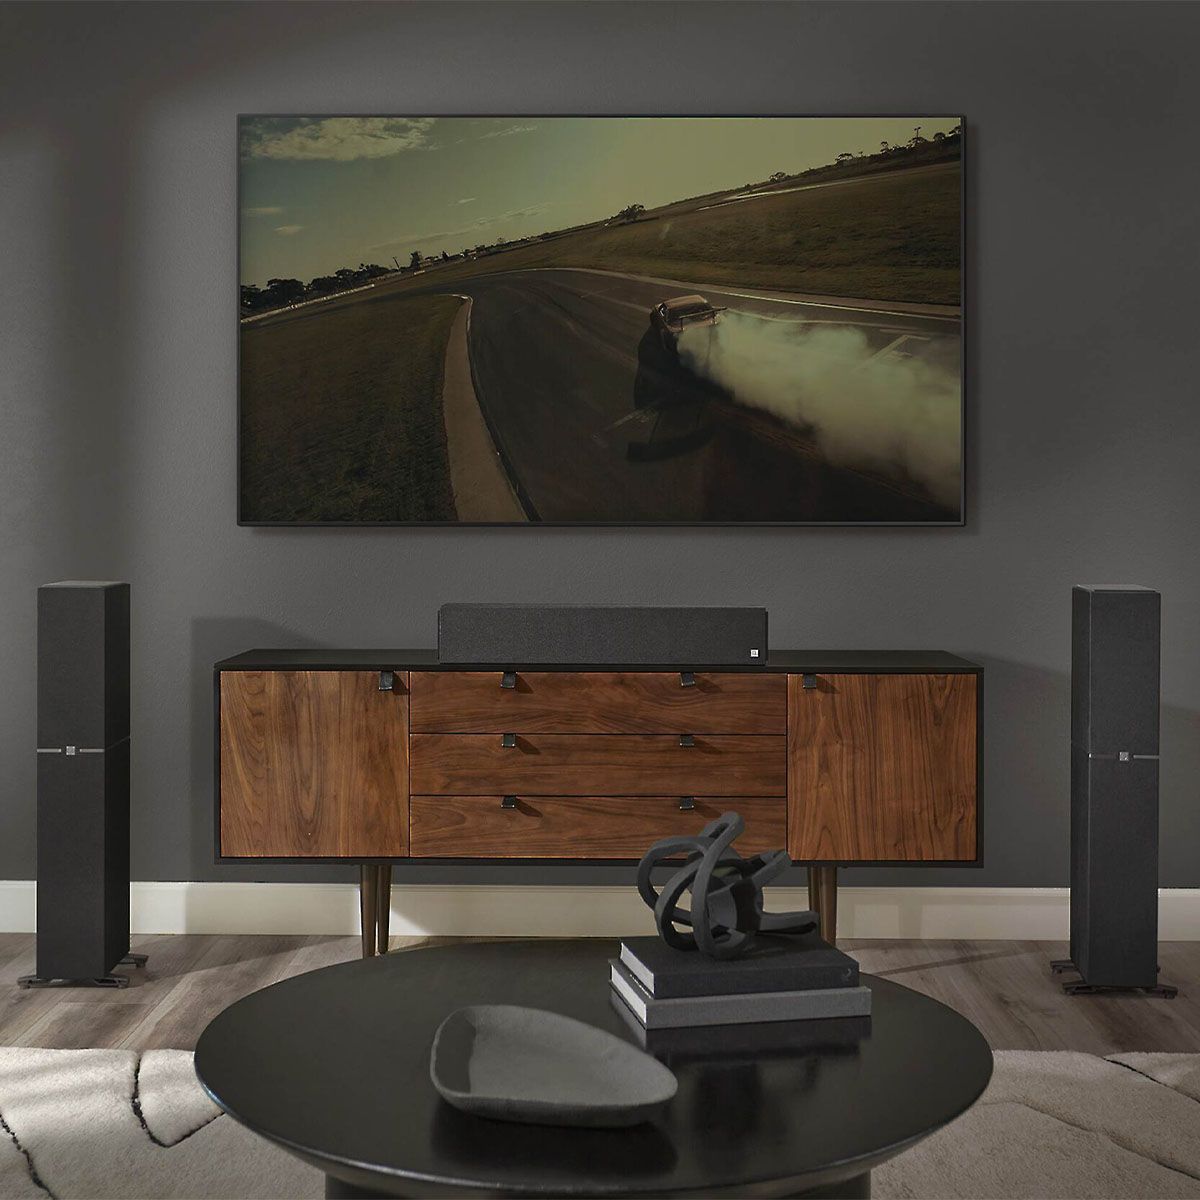 Dymension 20 Center Channel Speaker In Black Cinematic Living Room